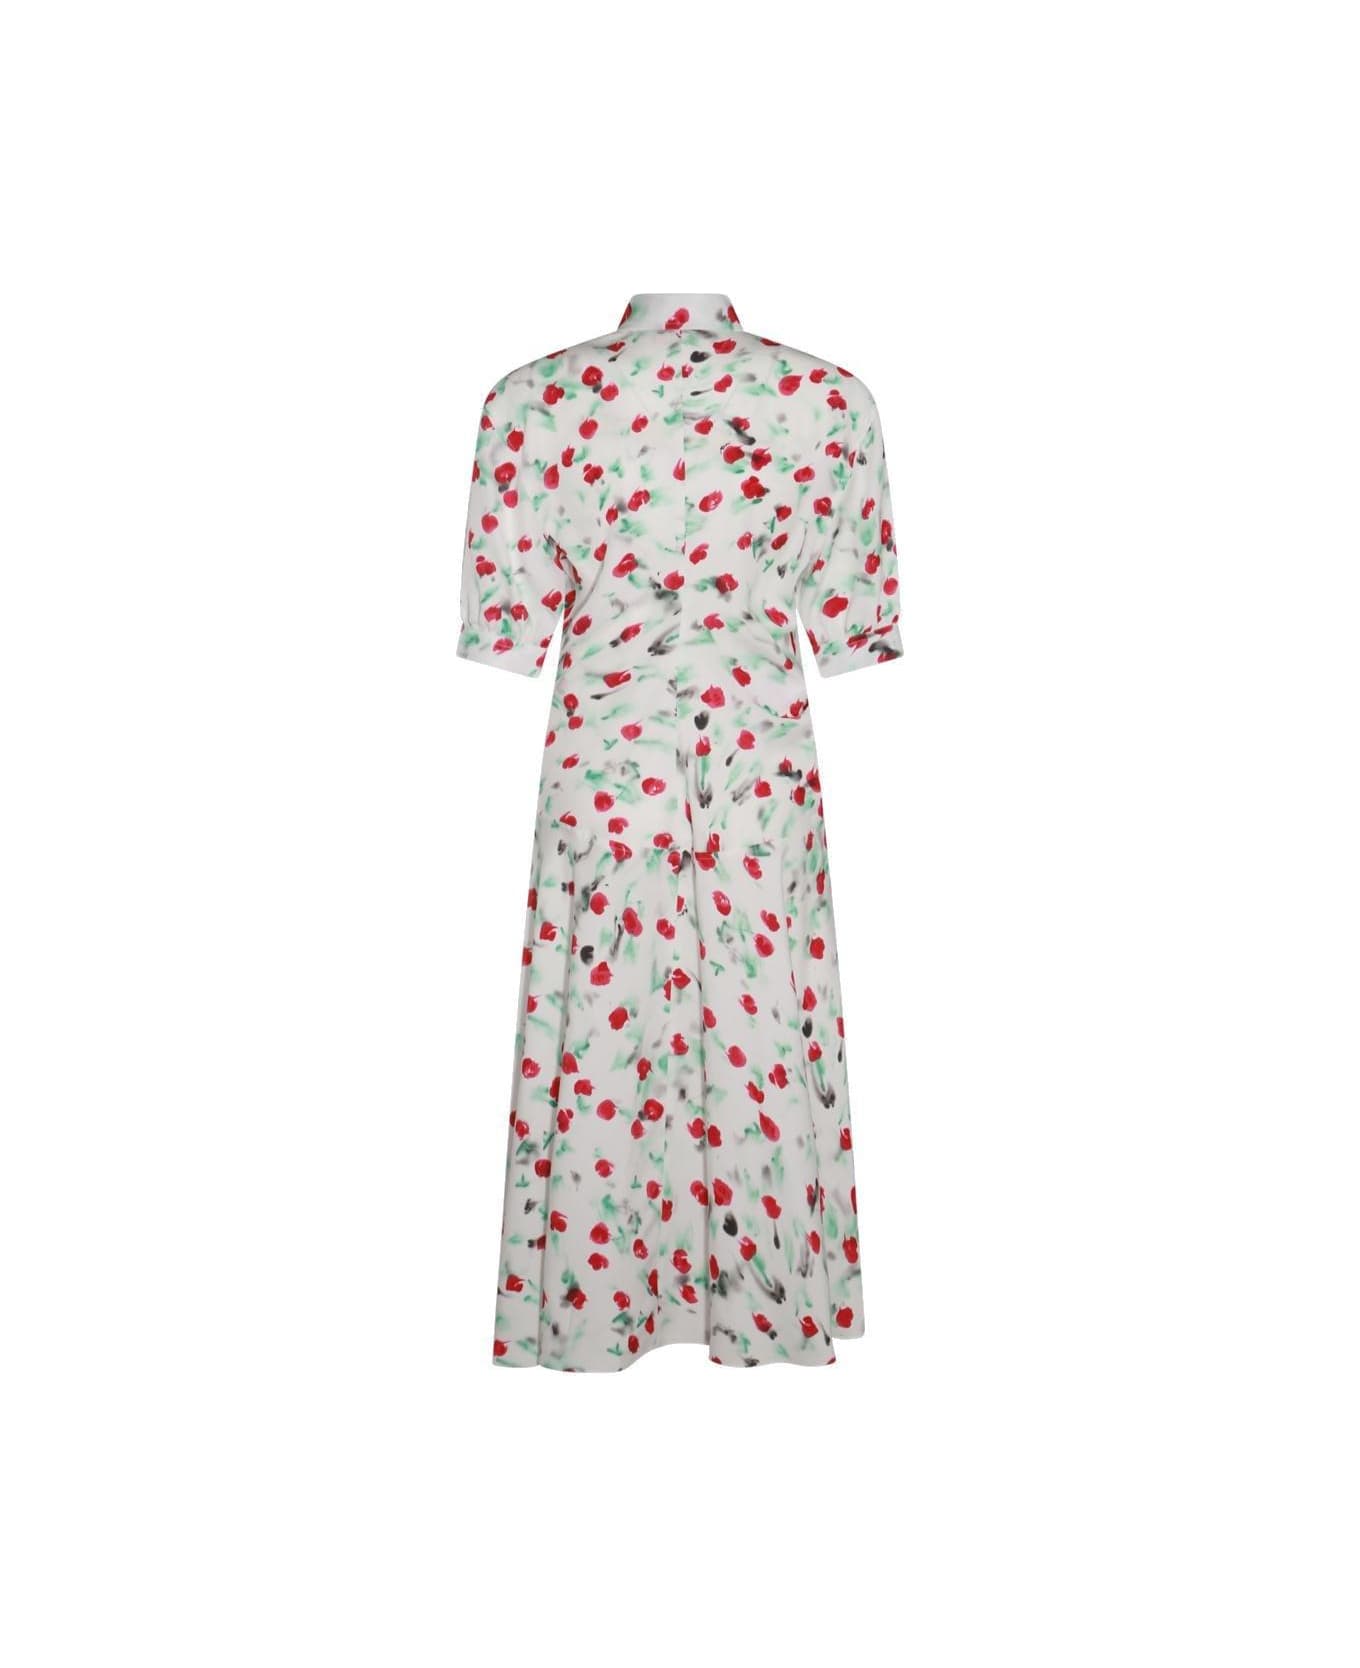 Marni Rose Print Shirt Dress - Lily White